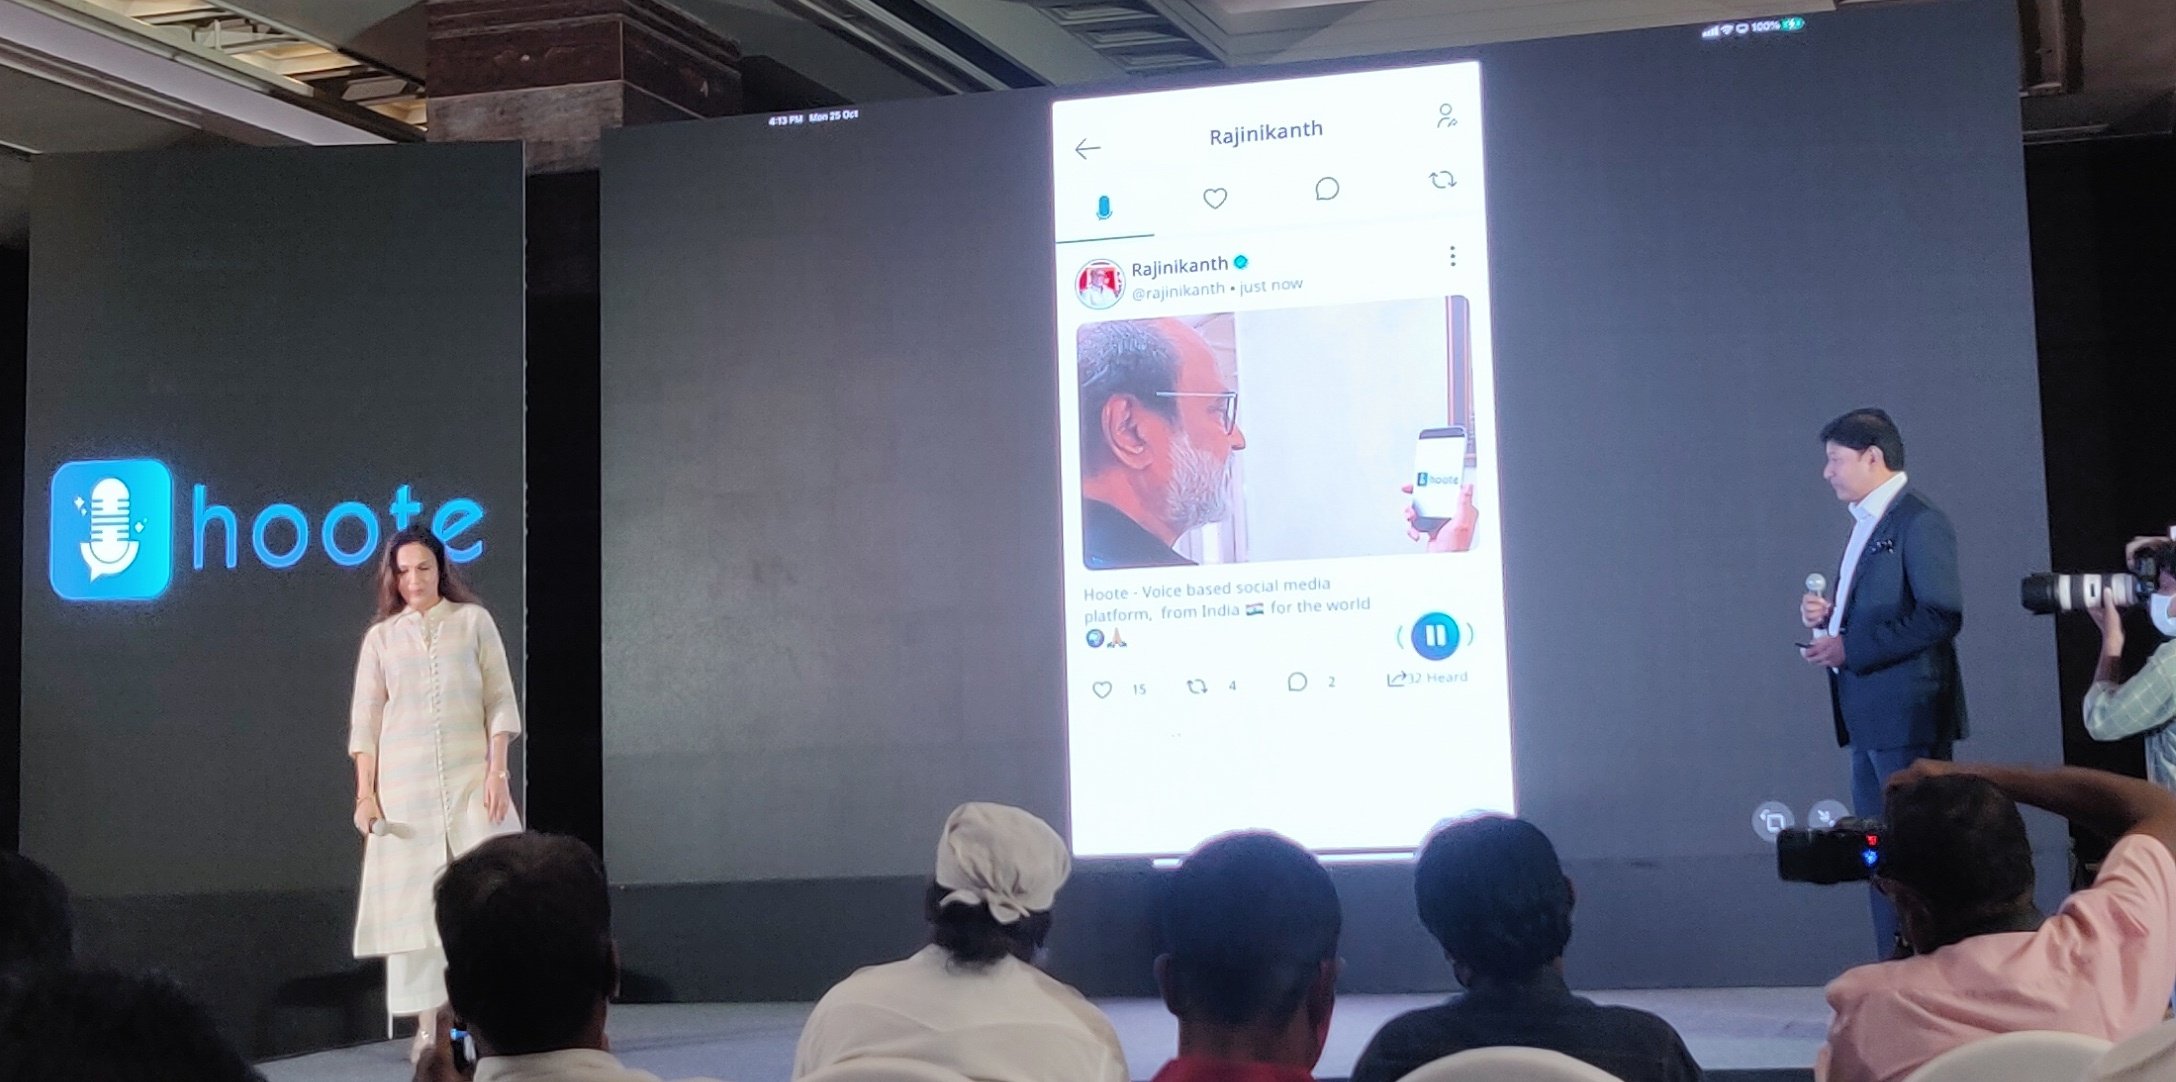 rajinikanth first speech hoote app launch soundarya rajnikanth